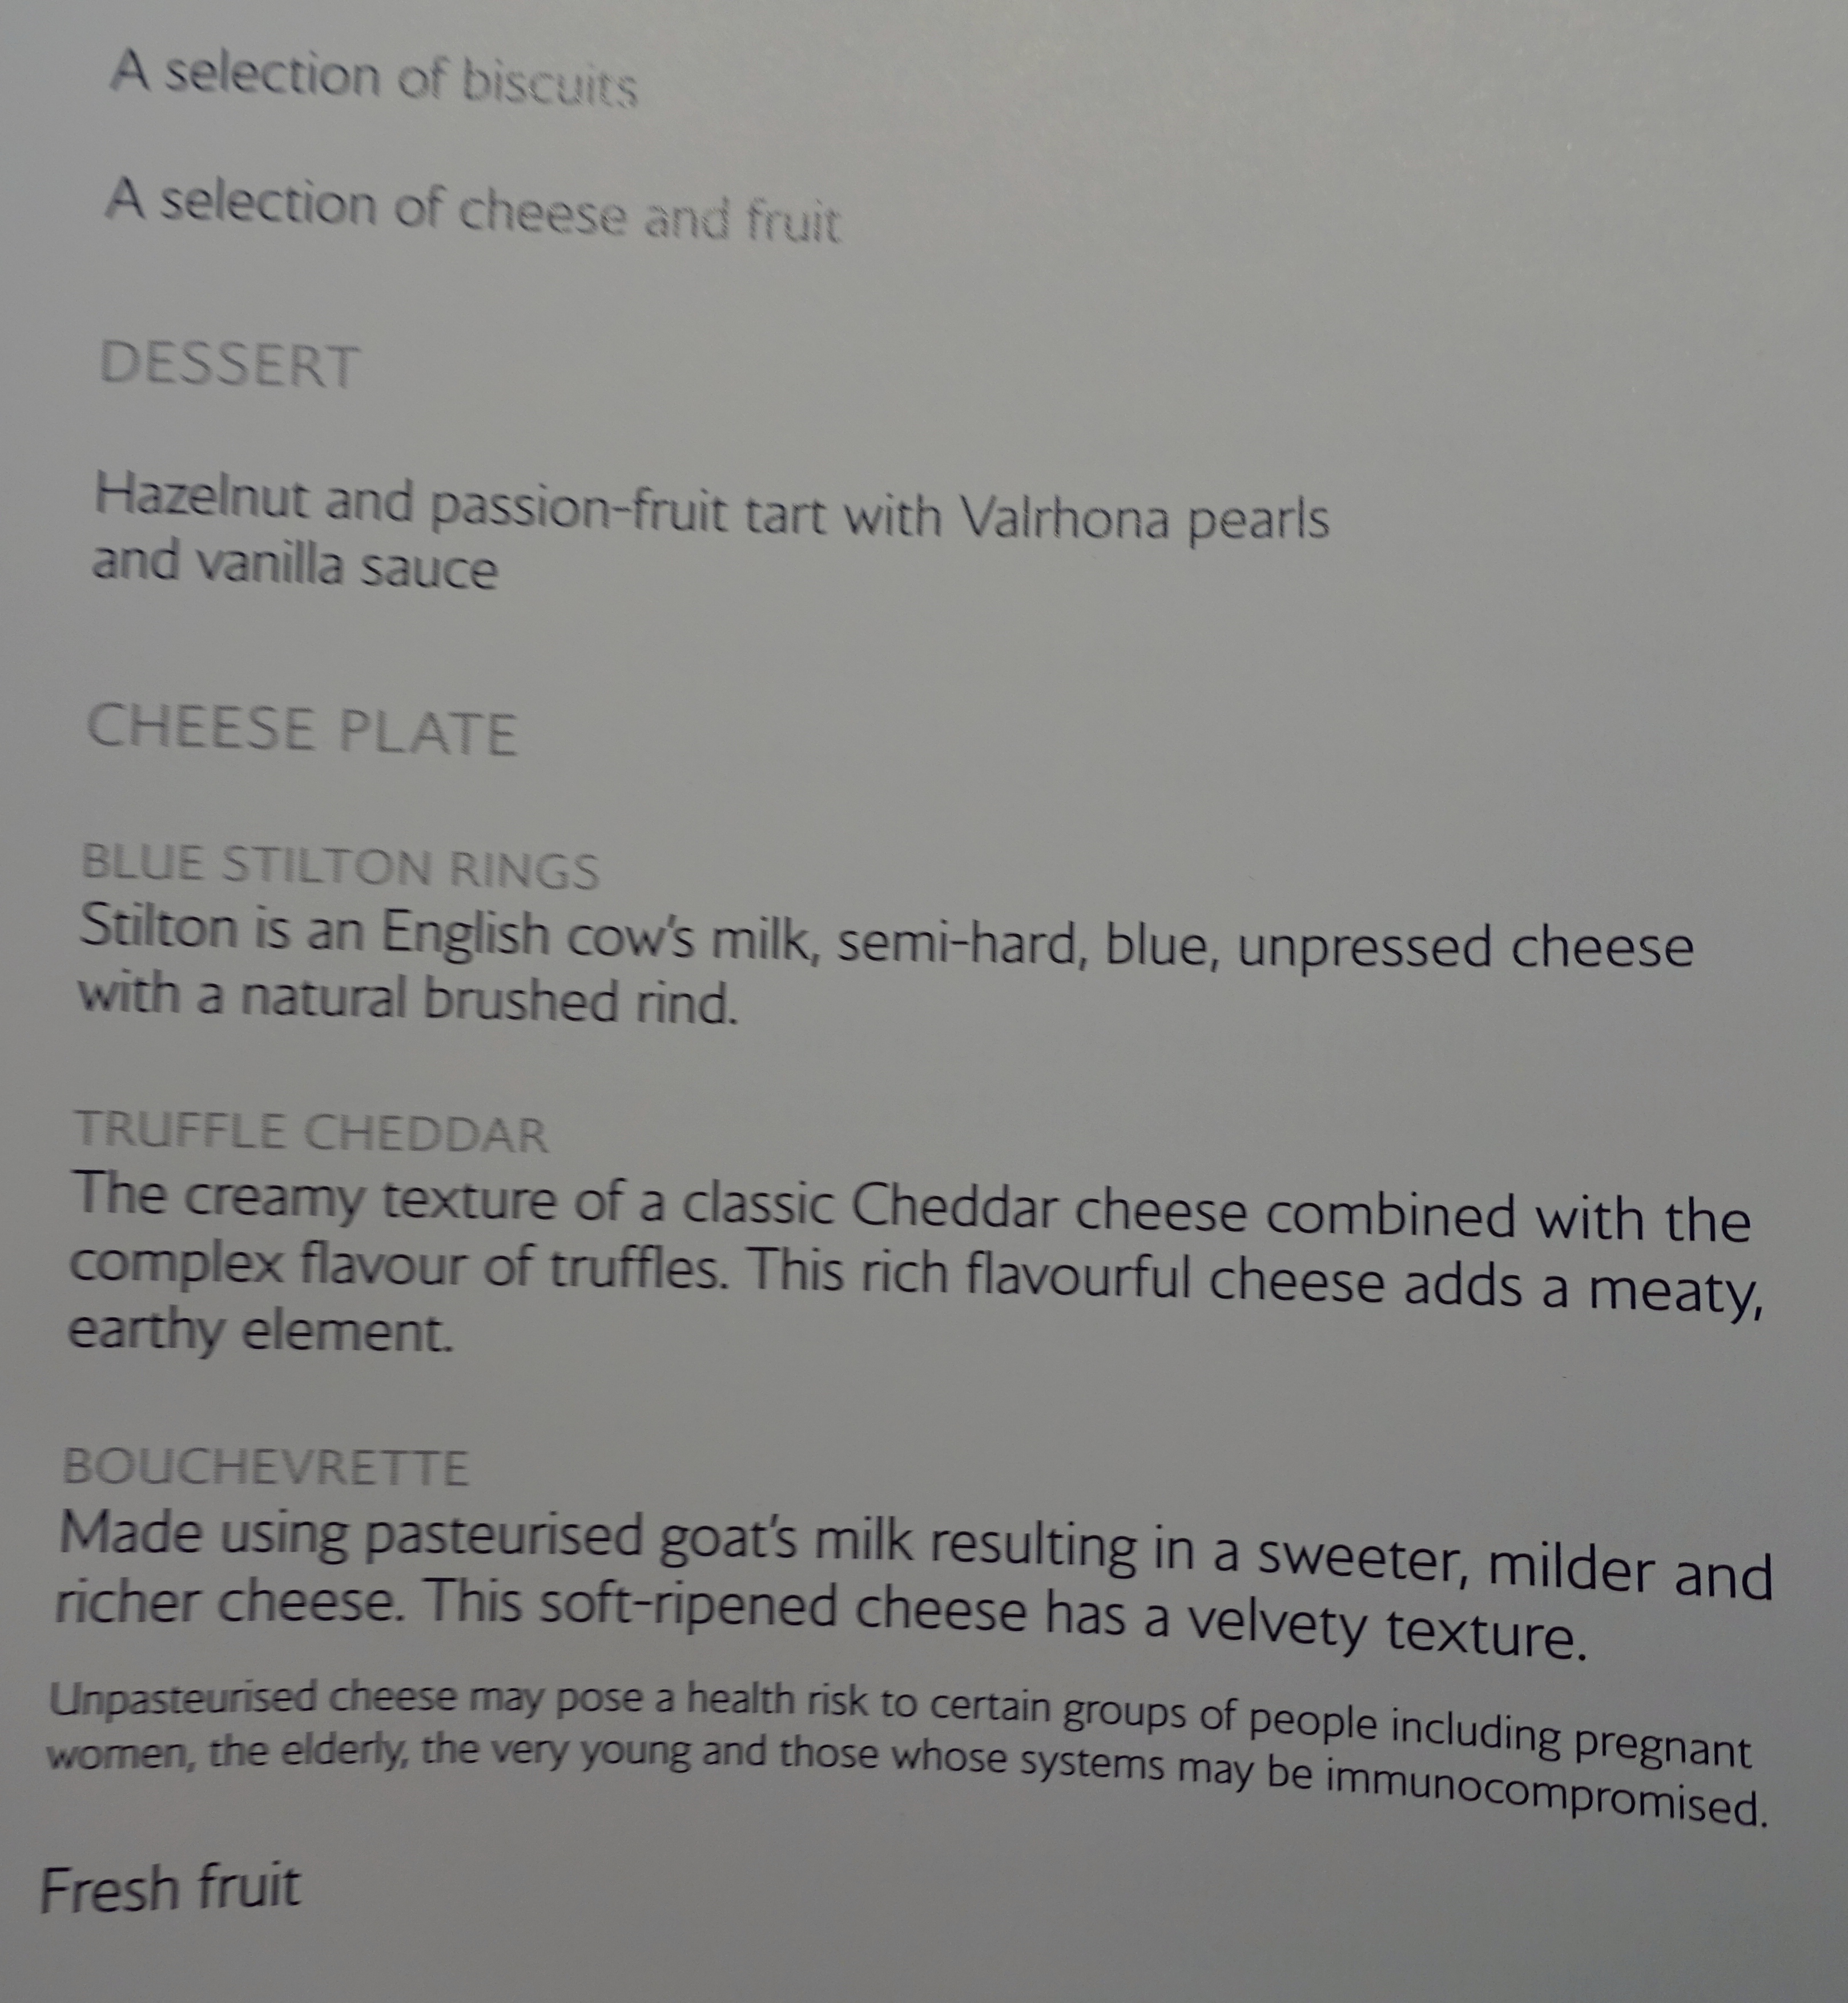 British Airways First Class Dessert and Cheese Menu, New York to London